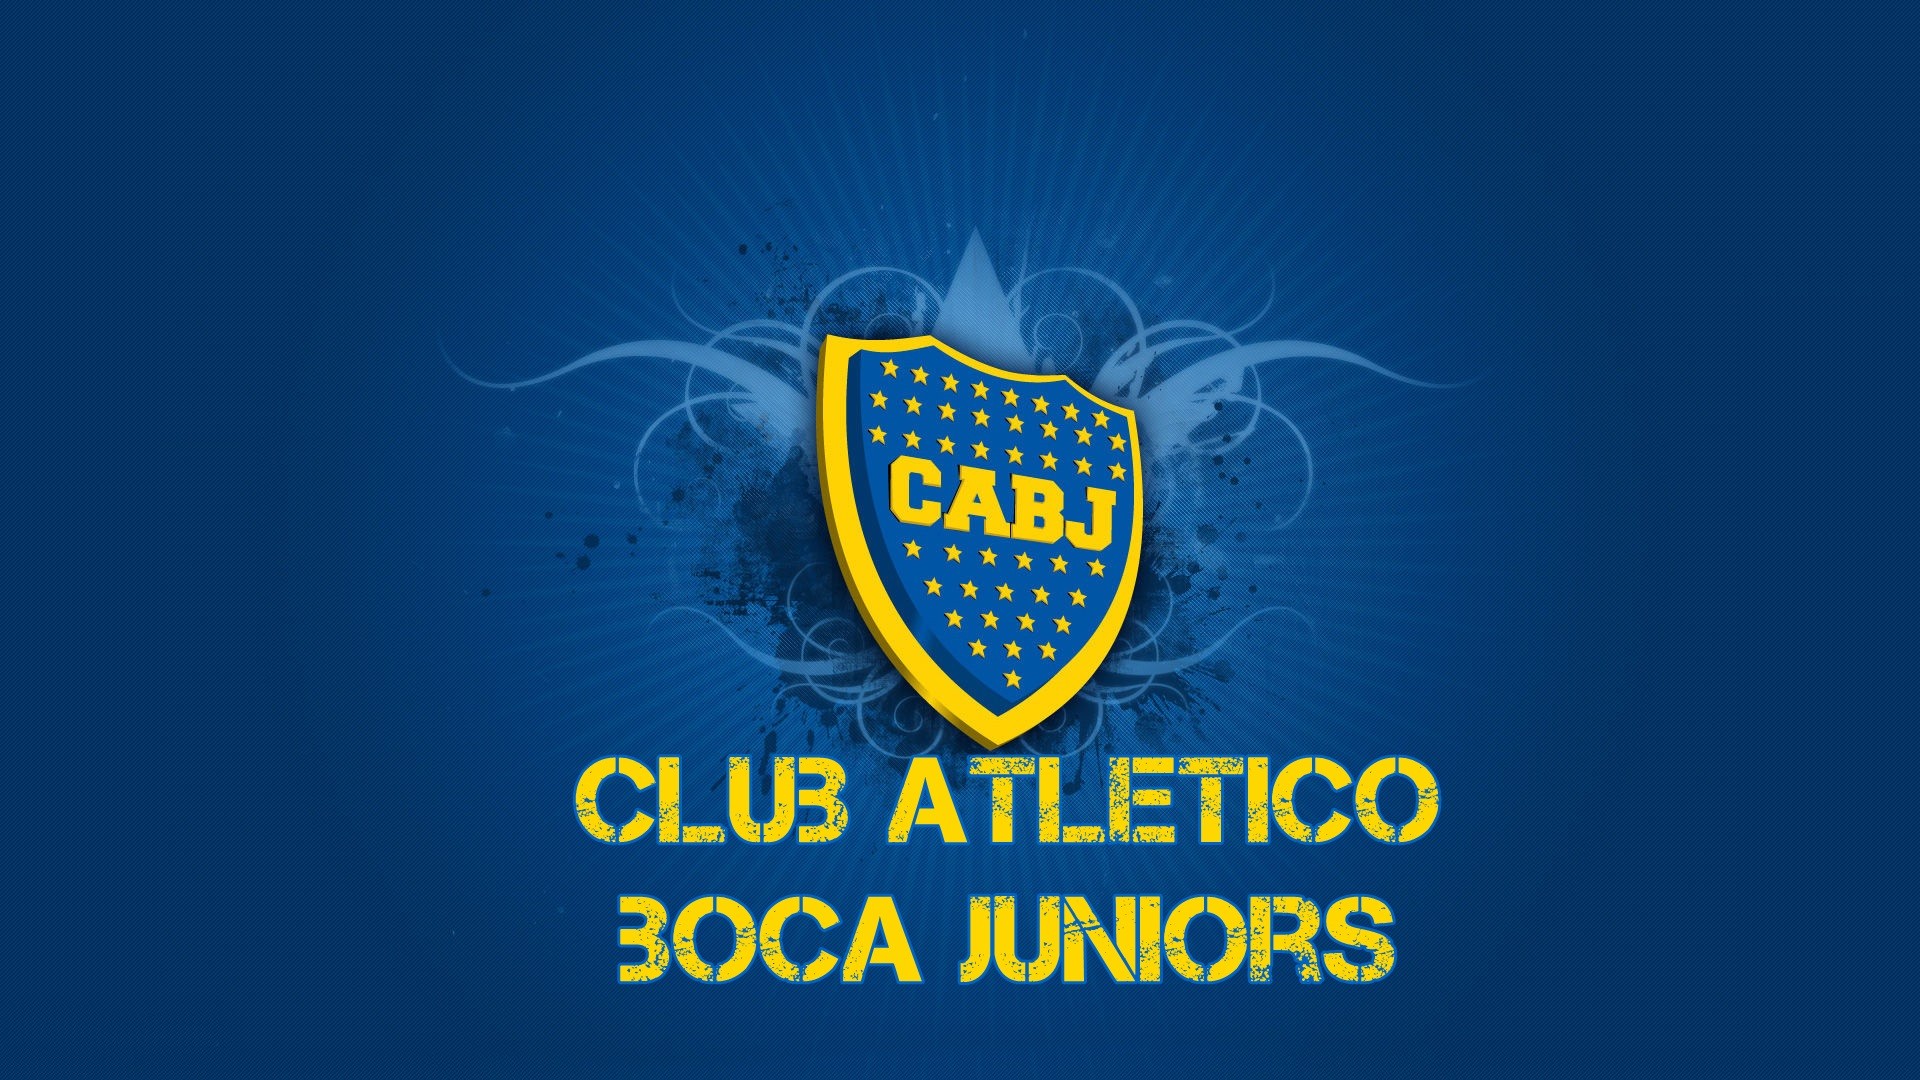 Boca Juniors, Soccer Clubs, Argentina, Soccer, Sports, Buenos Aires Wallpaper